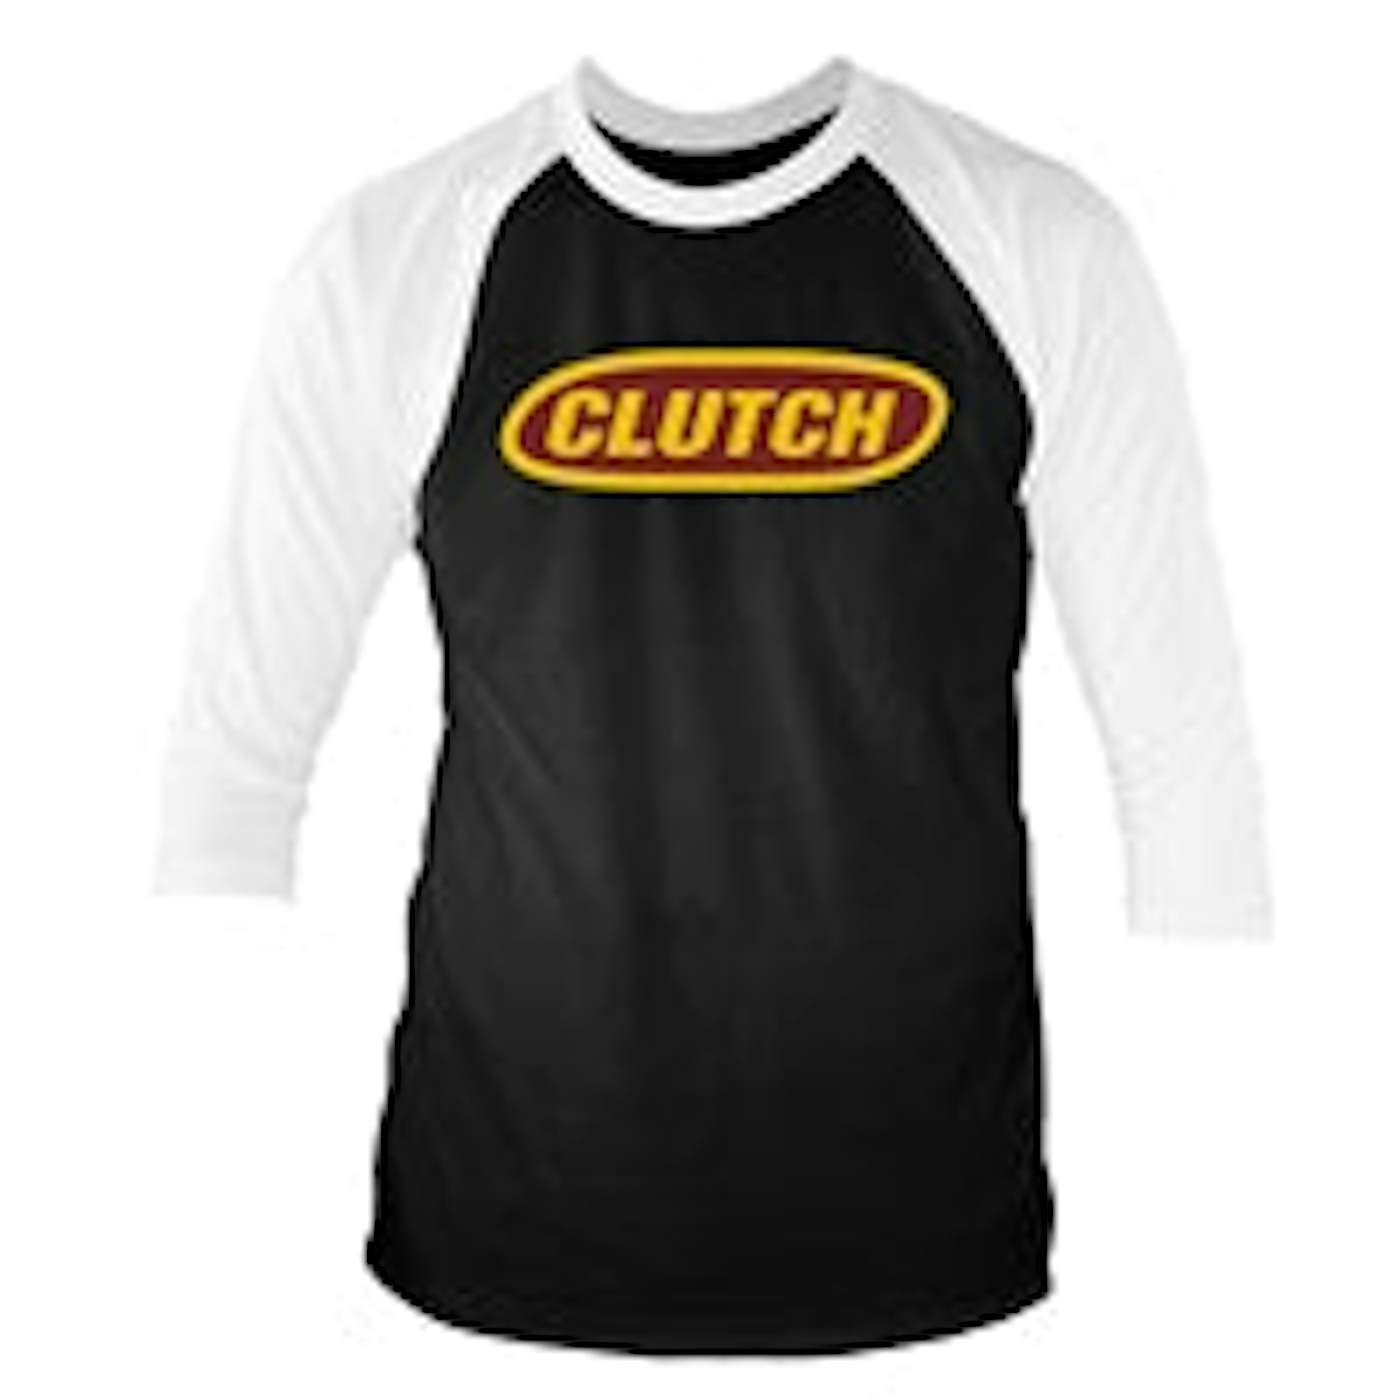 Clutch Long Sleeve T Shirt - Classic Logo (Black/Whte)